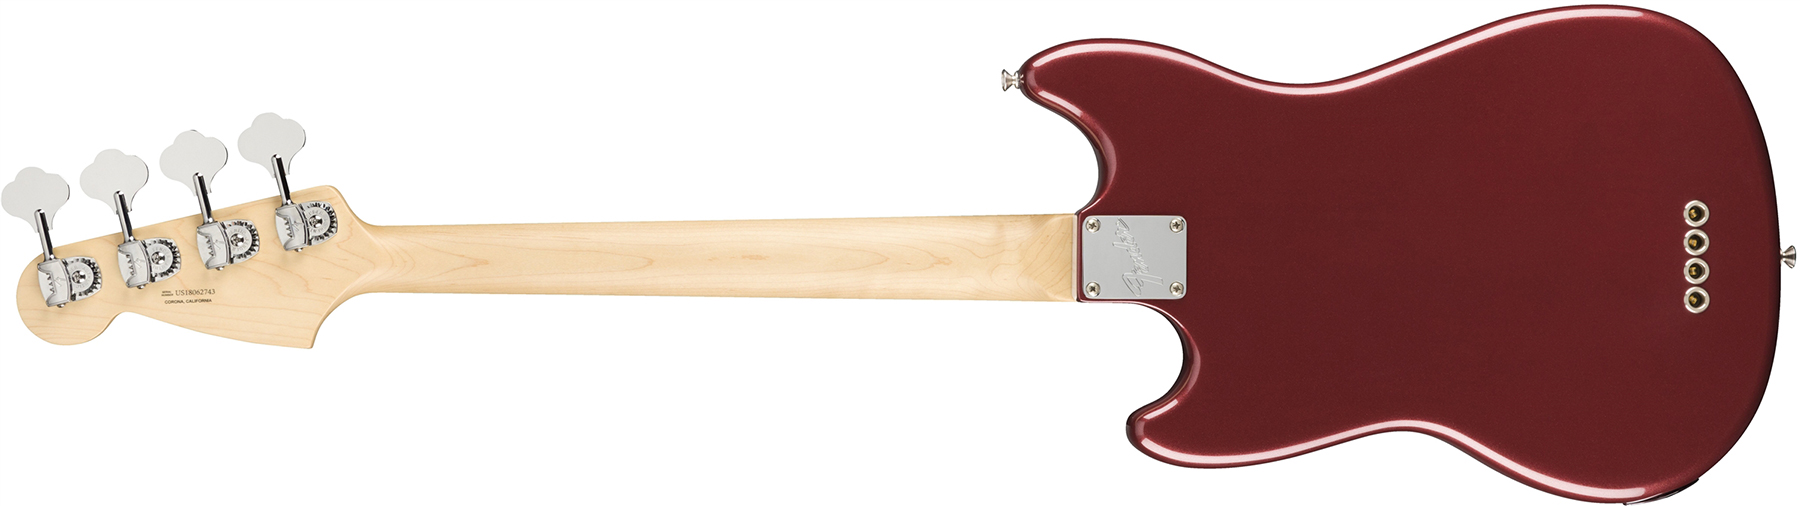 Fender Mustang Bass American Performer Usa Rw - Aubergine - E-Bass für Kinder - Variation 1